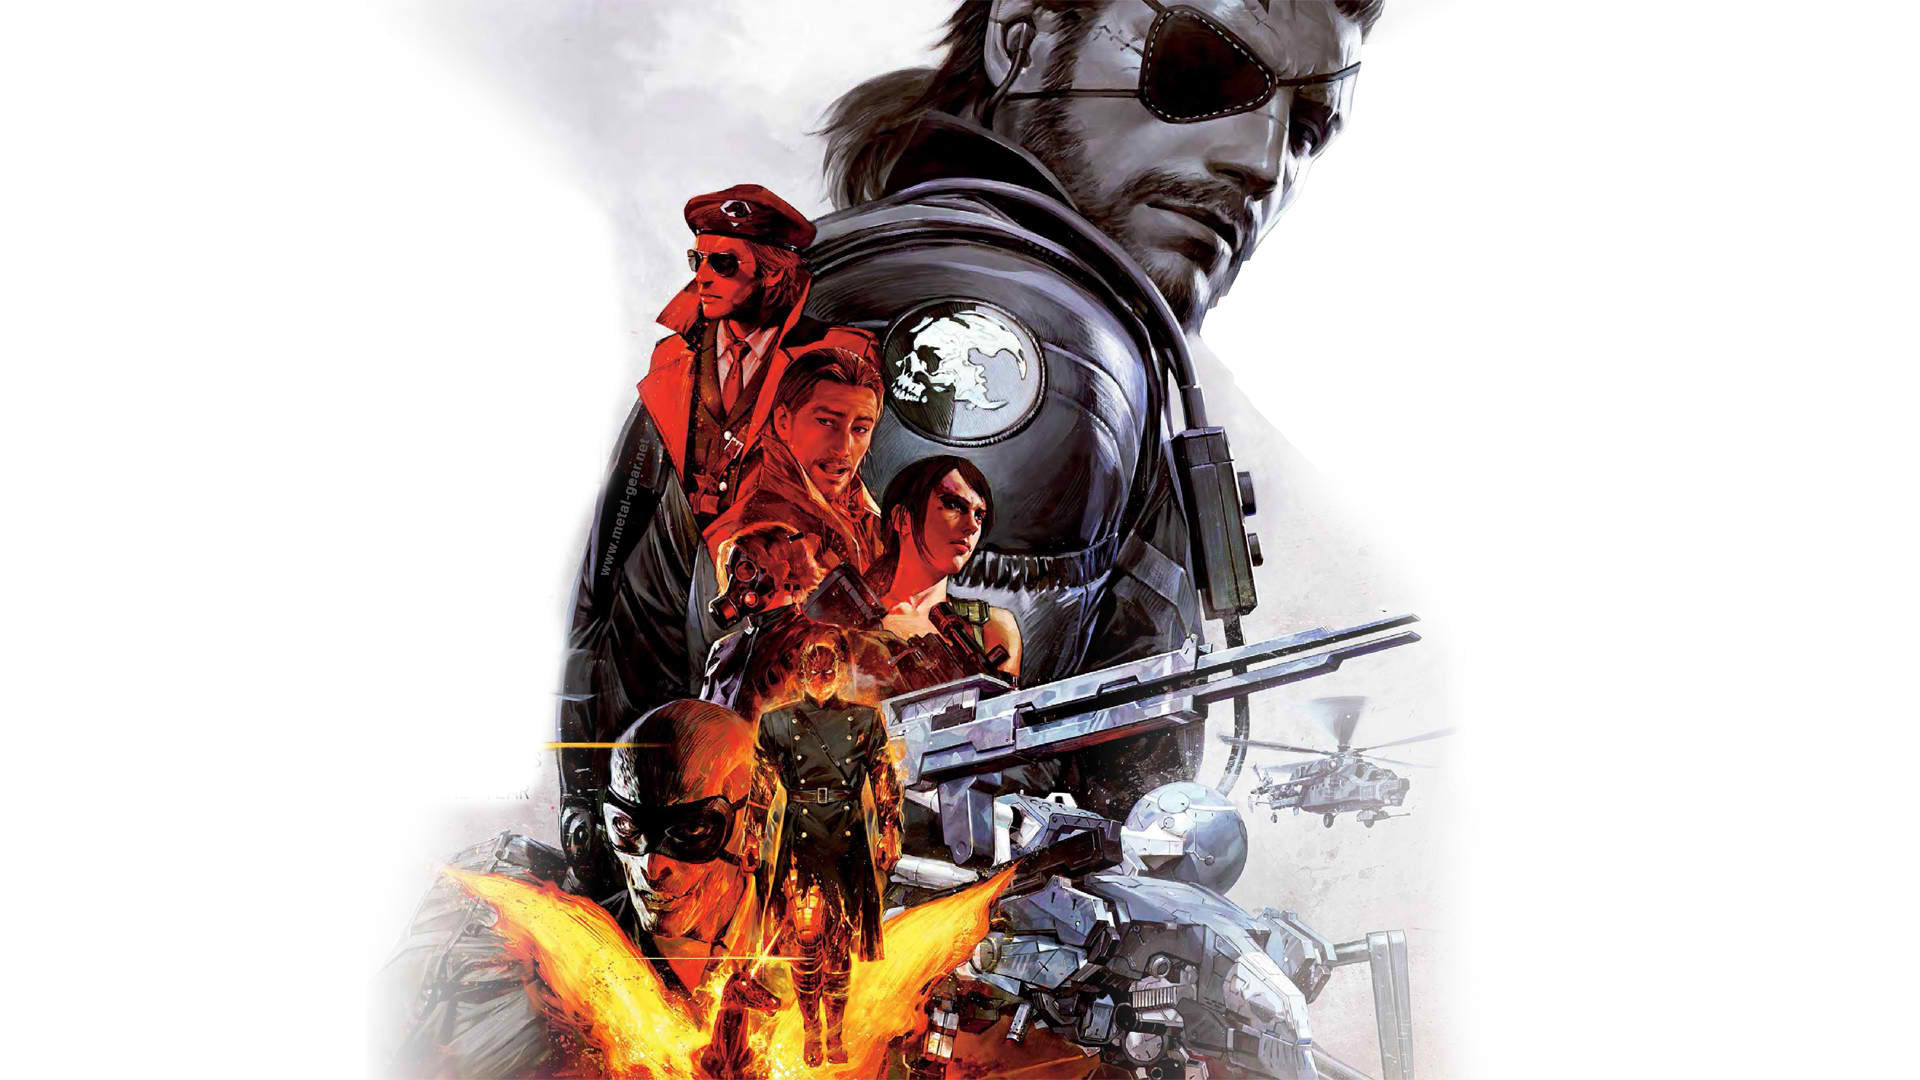 1920x1080 Metal Gear Solid V: The Phantom Pain Wallpaper in 